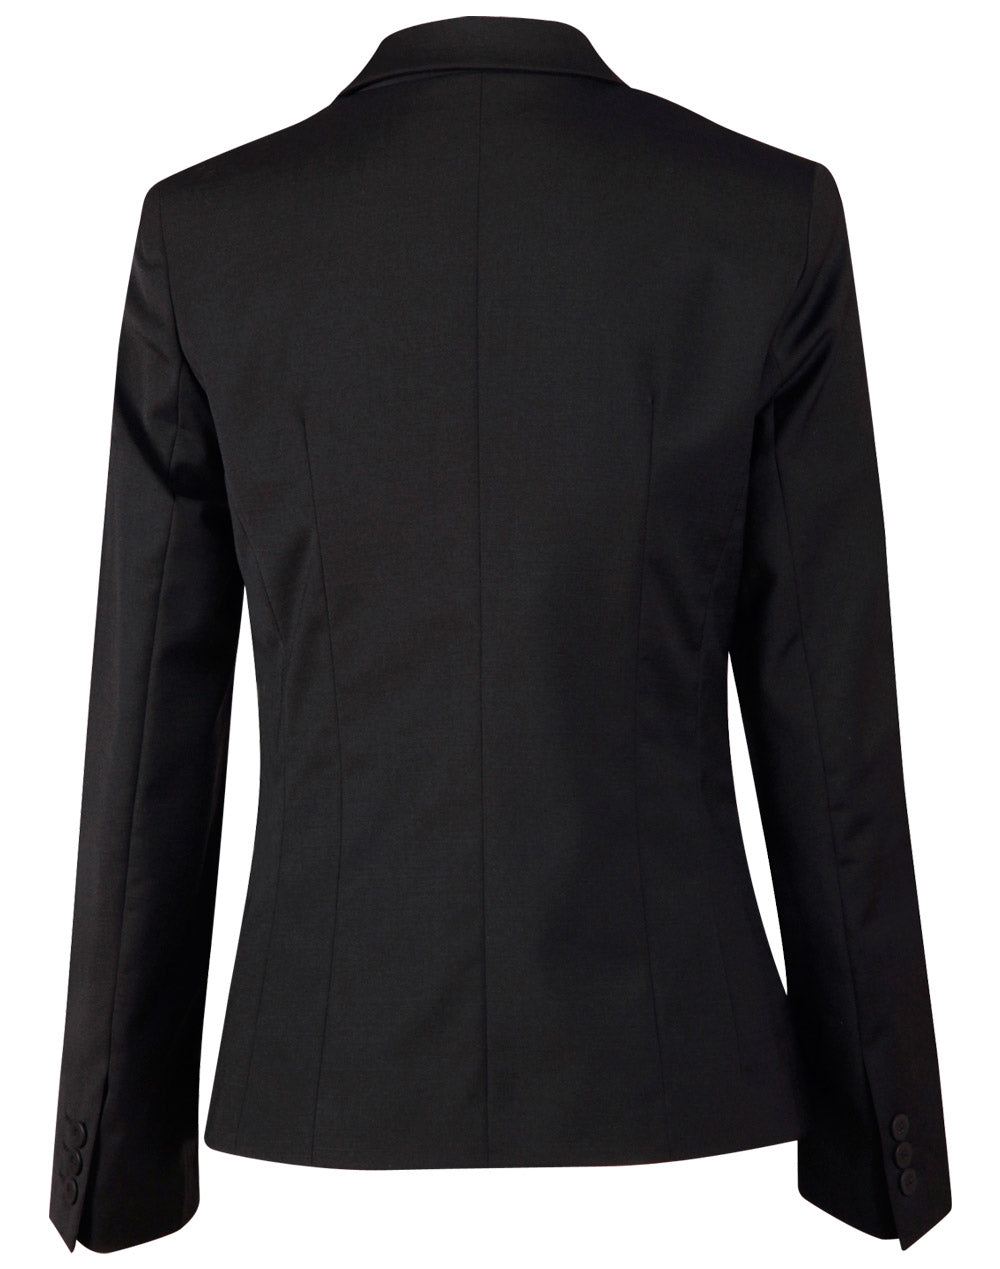 Winning Spirit -Ladies’ Wool Blend Stretch One Button Cropped Jacket-M9201